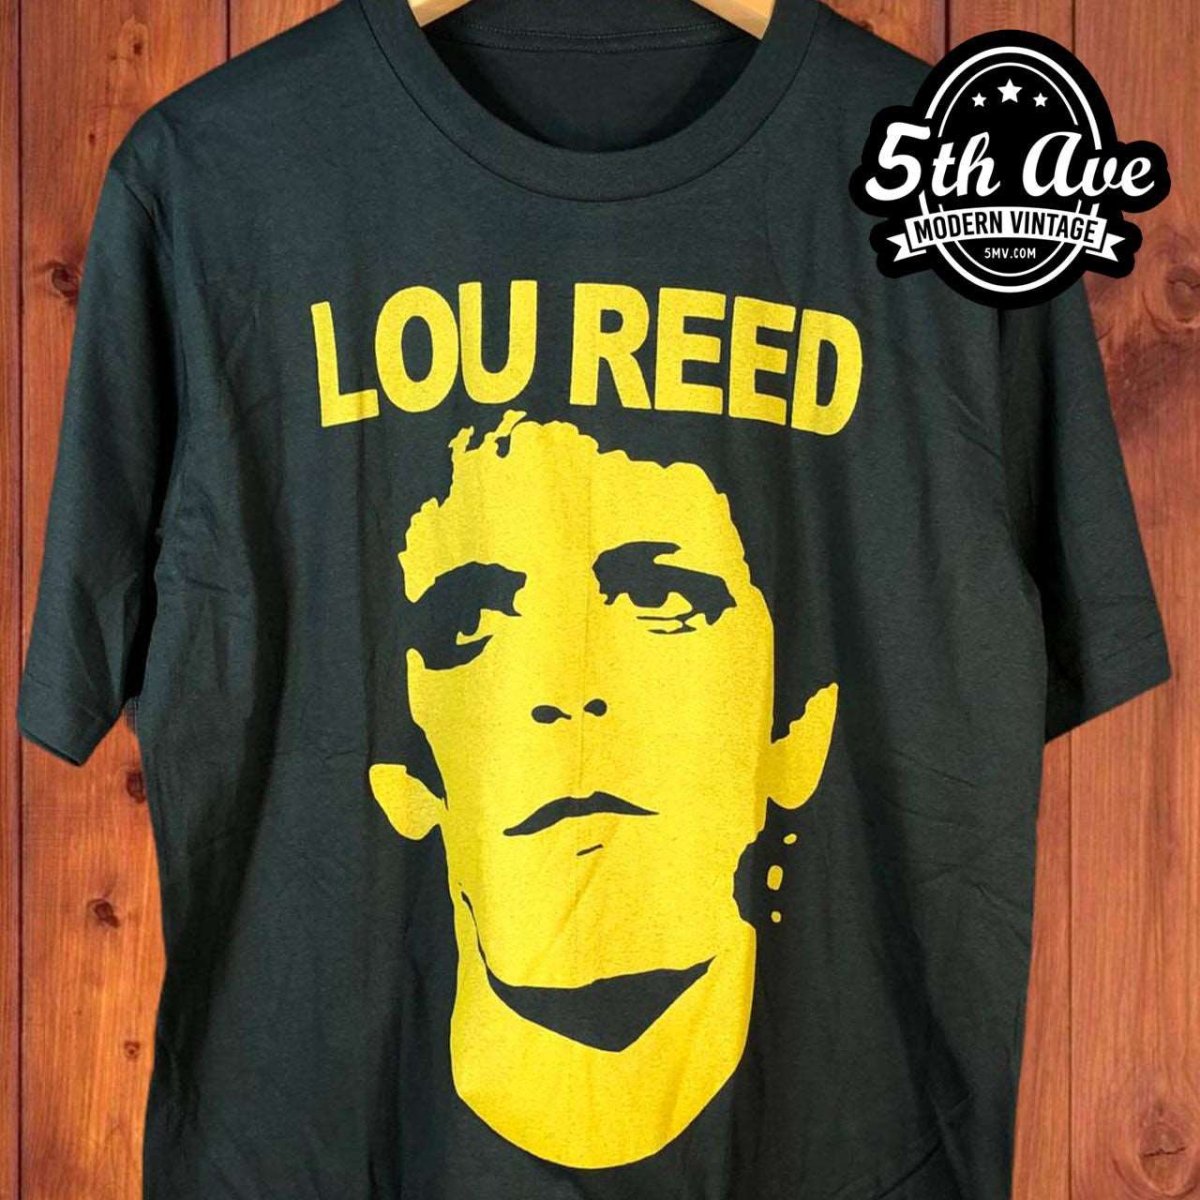 Lou Reed 'Rock 'n' Roll Animal' Distressed Cotton T-Shirt - Vintage Band Shirts